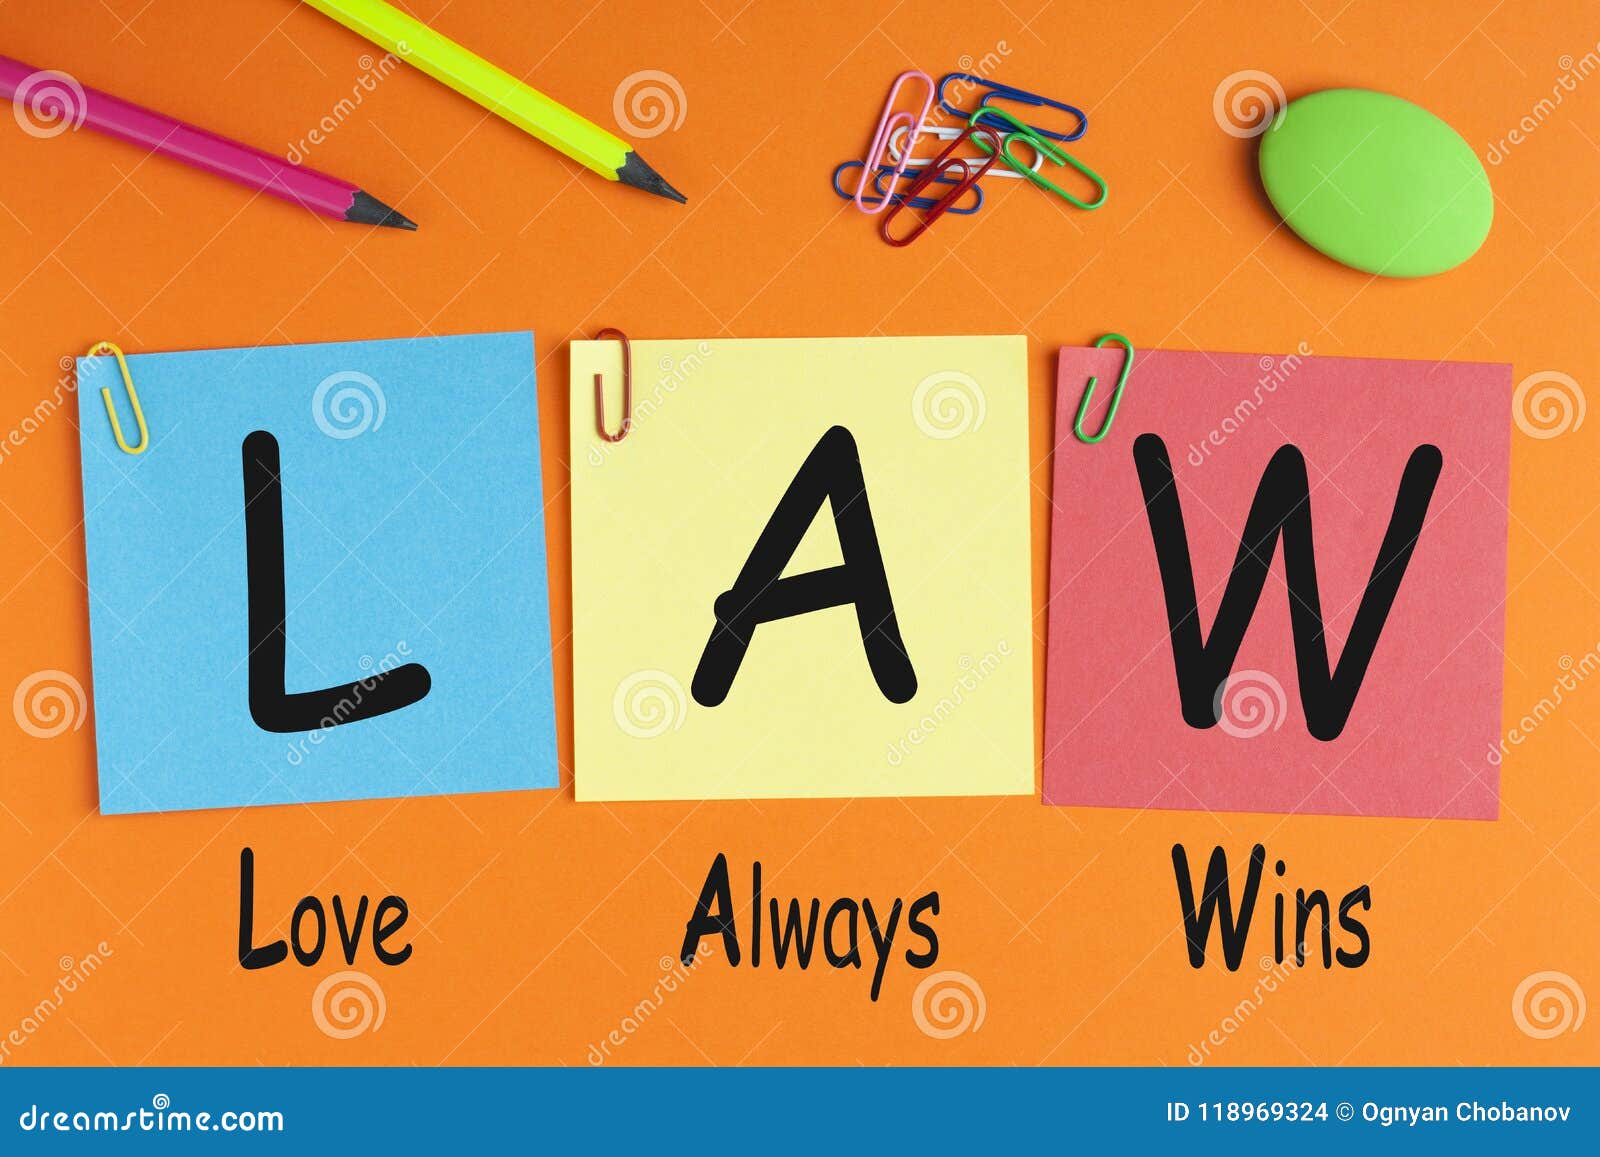 love always wins law